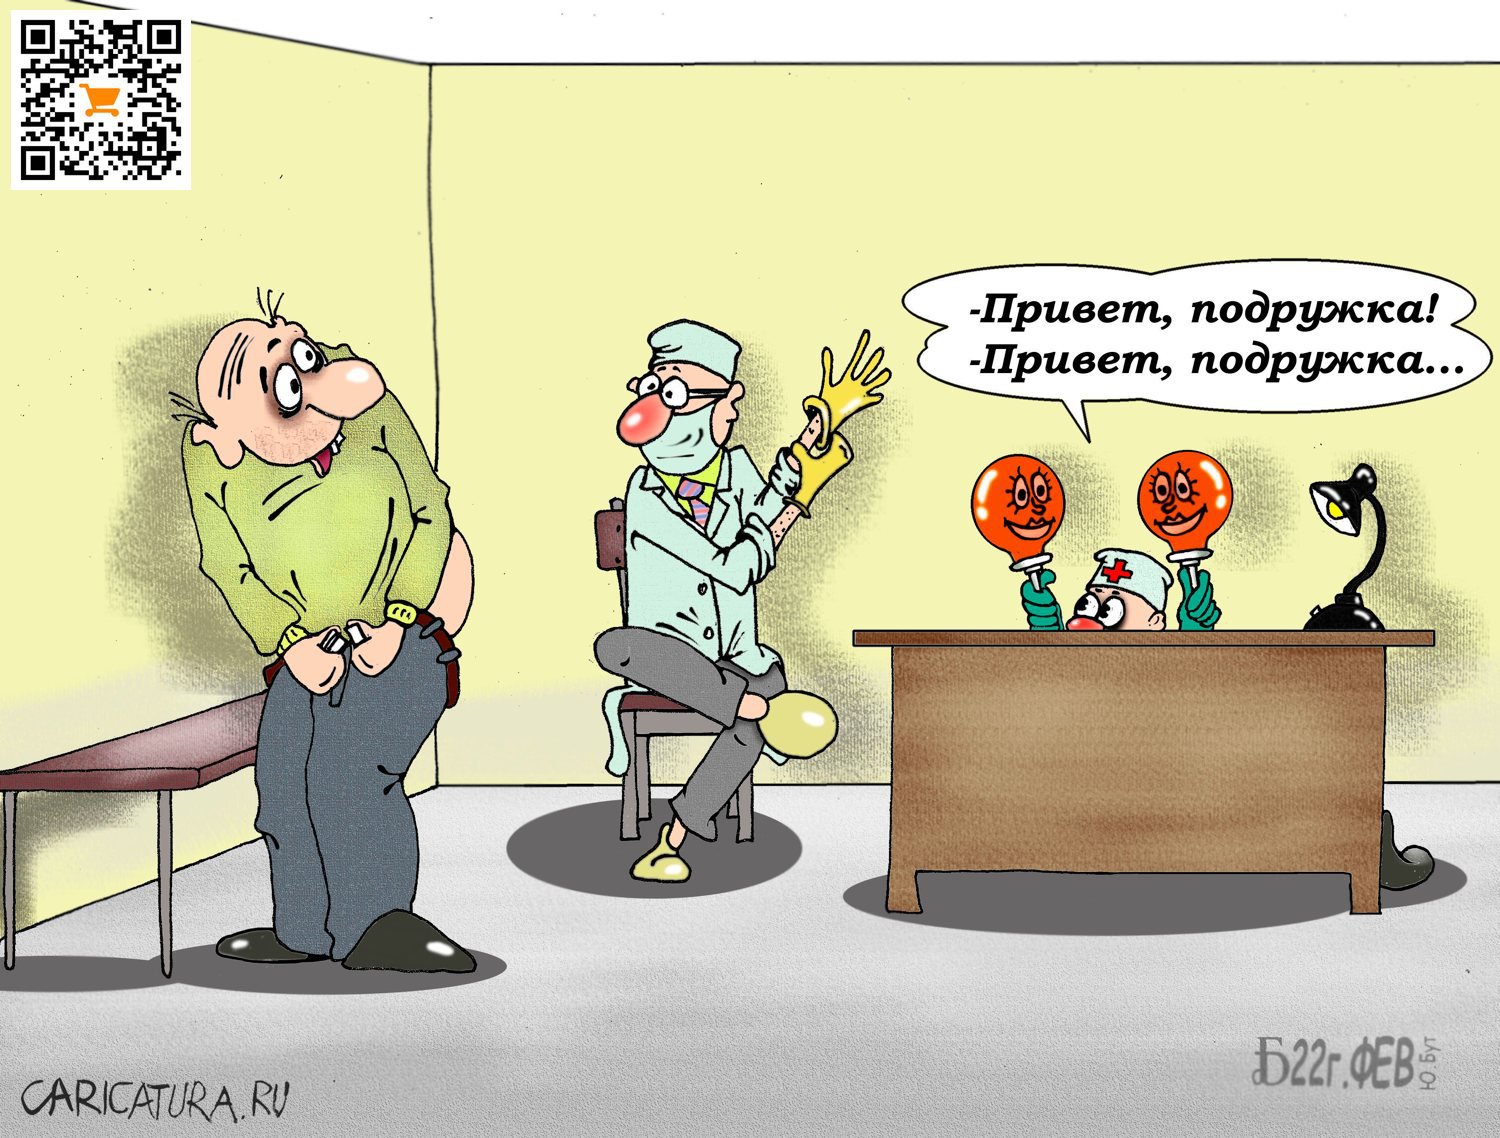 Карикатура "Про кукольный театр", Борис Демин